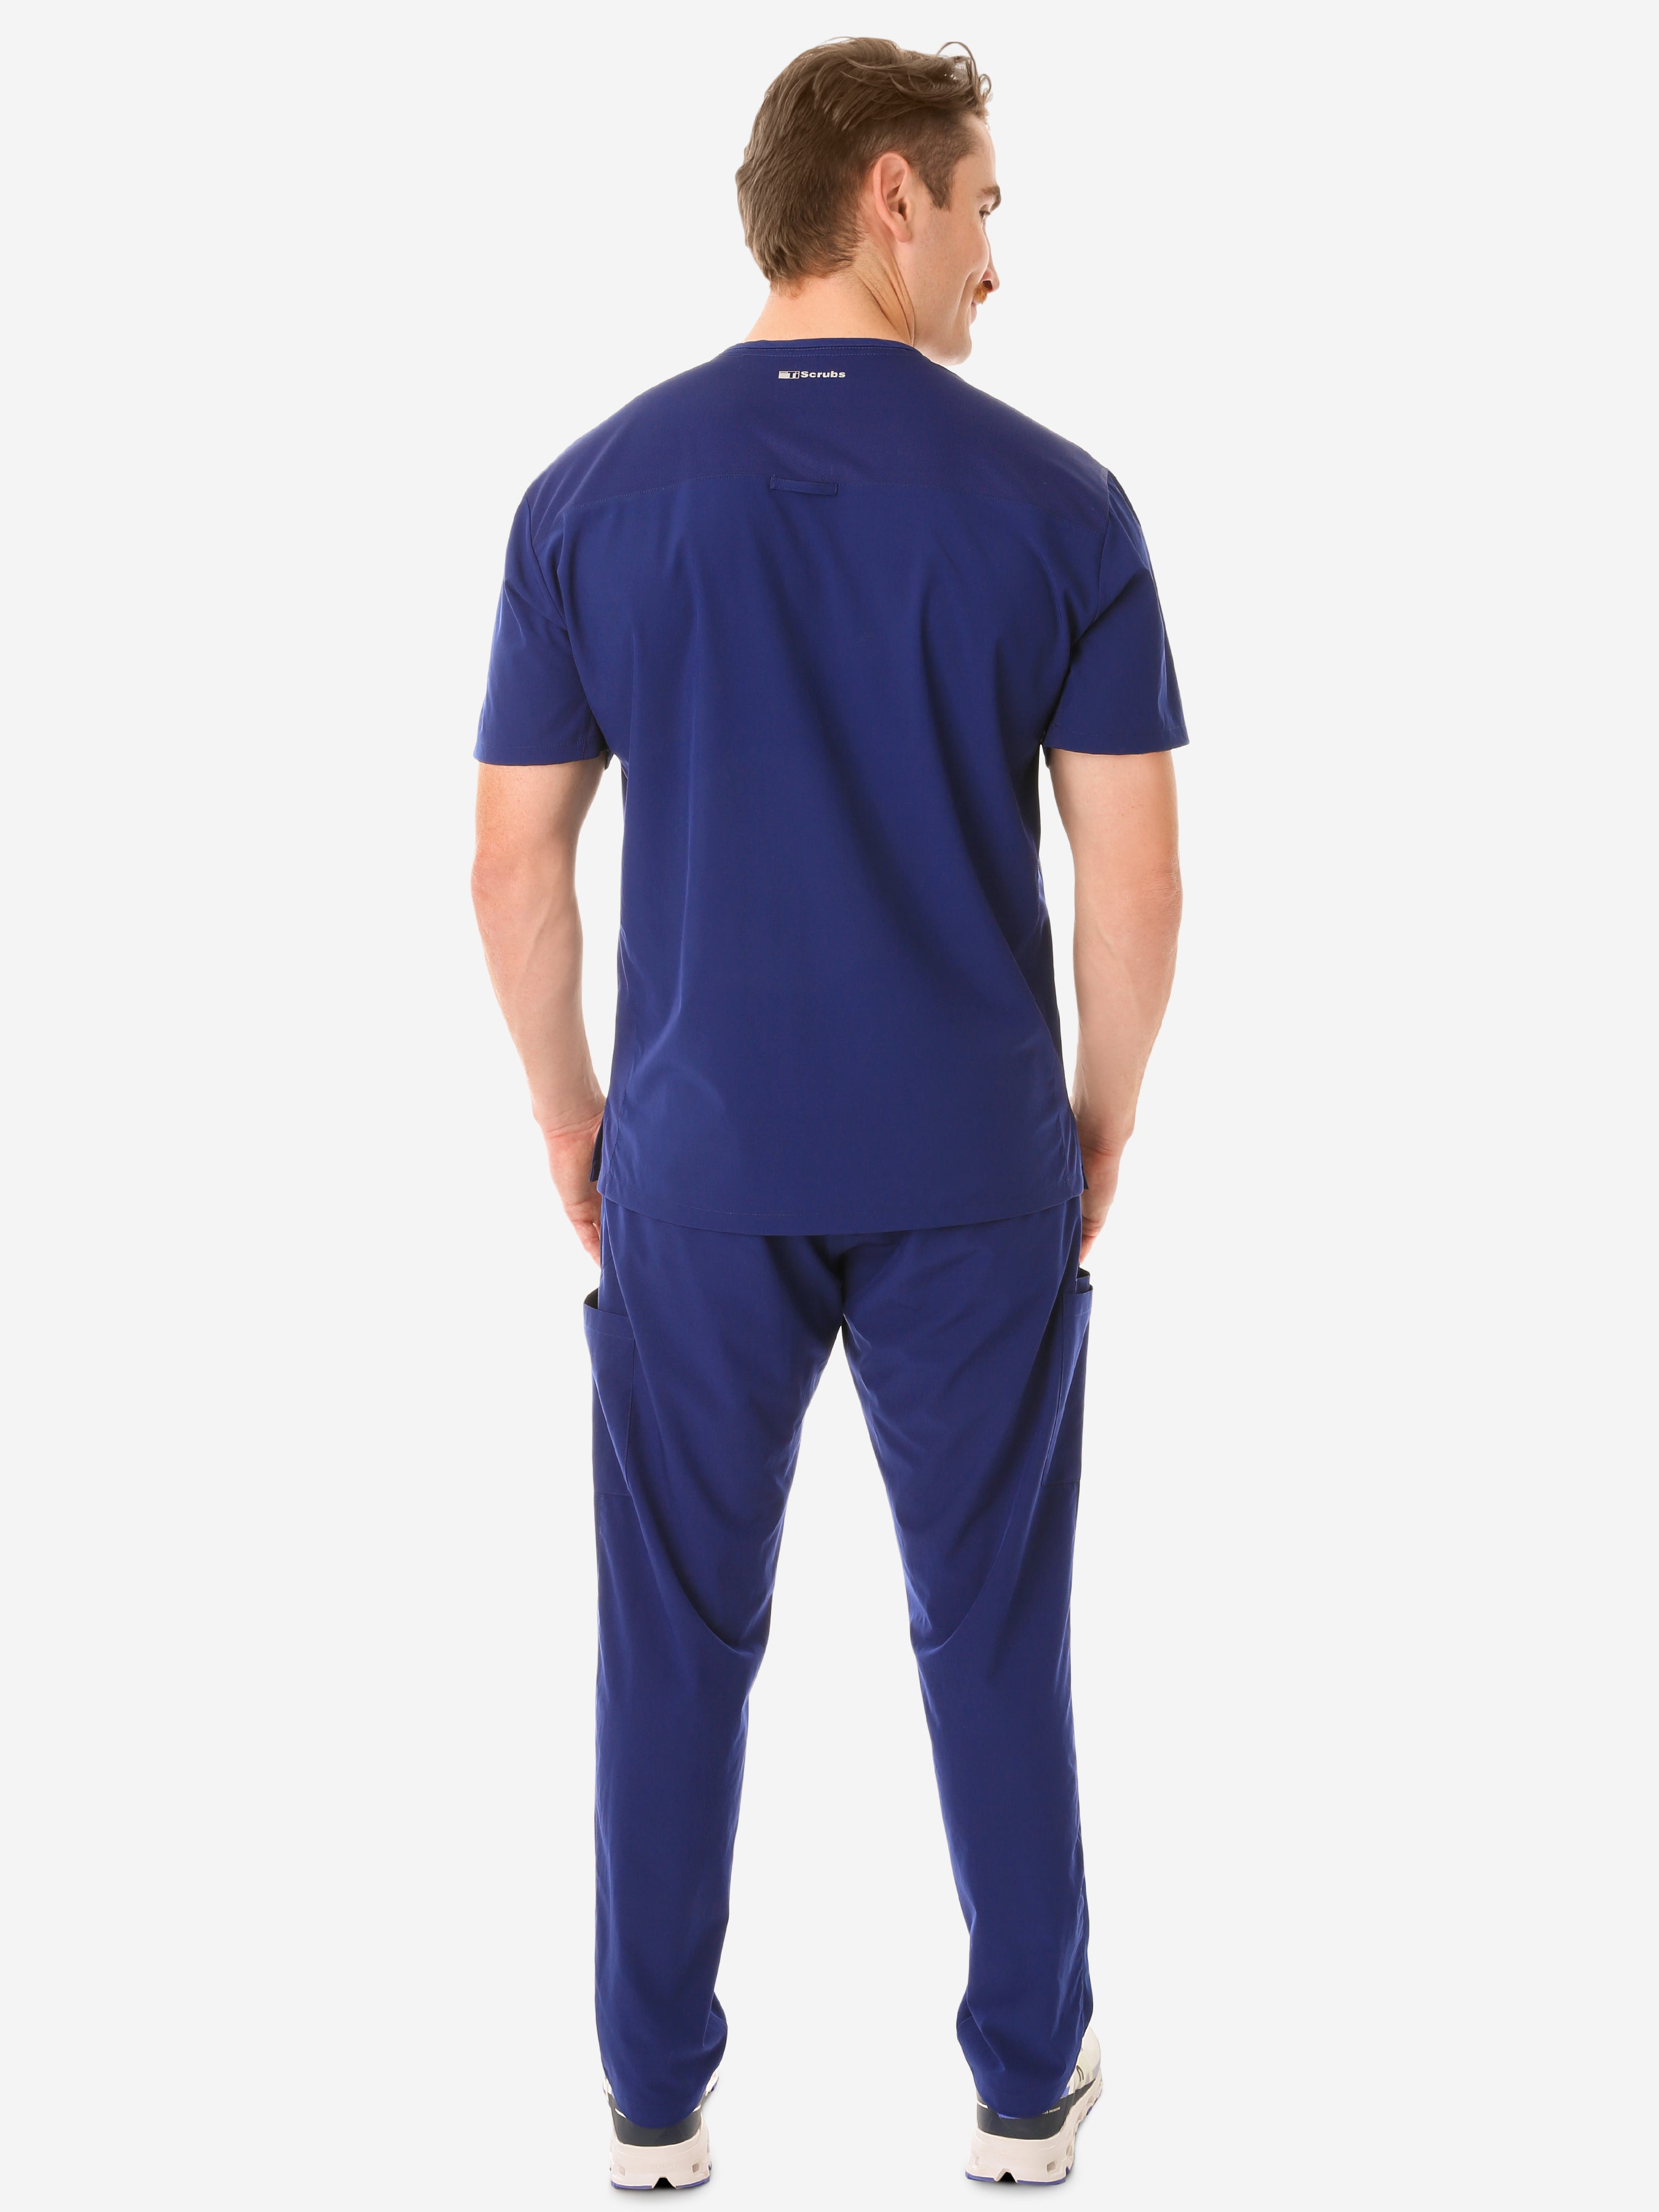 Men's Navy Blue Five-Pocket Scrub Full Body Back View with 9-Pocket Pants